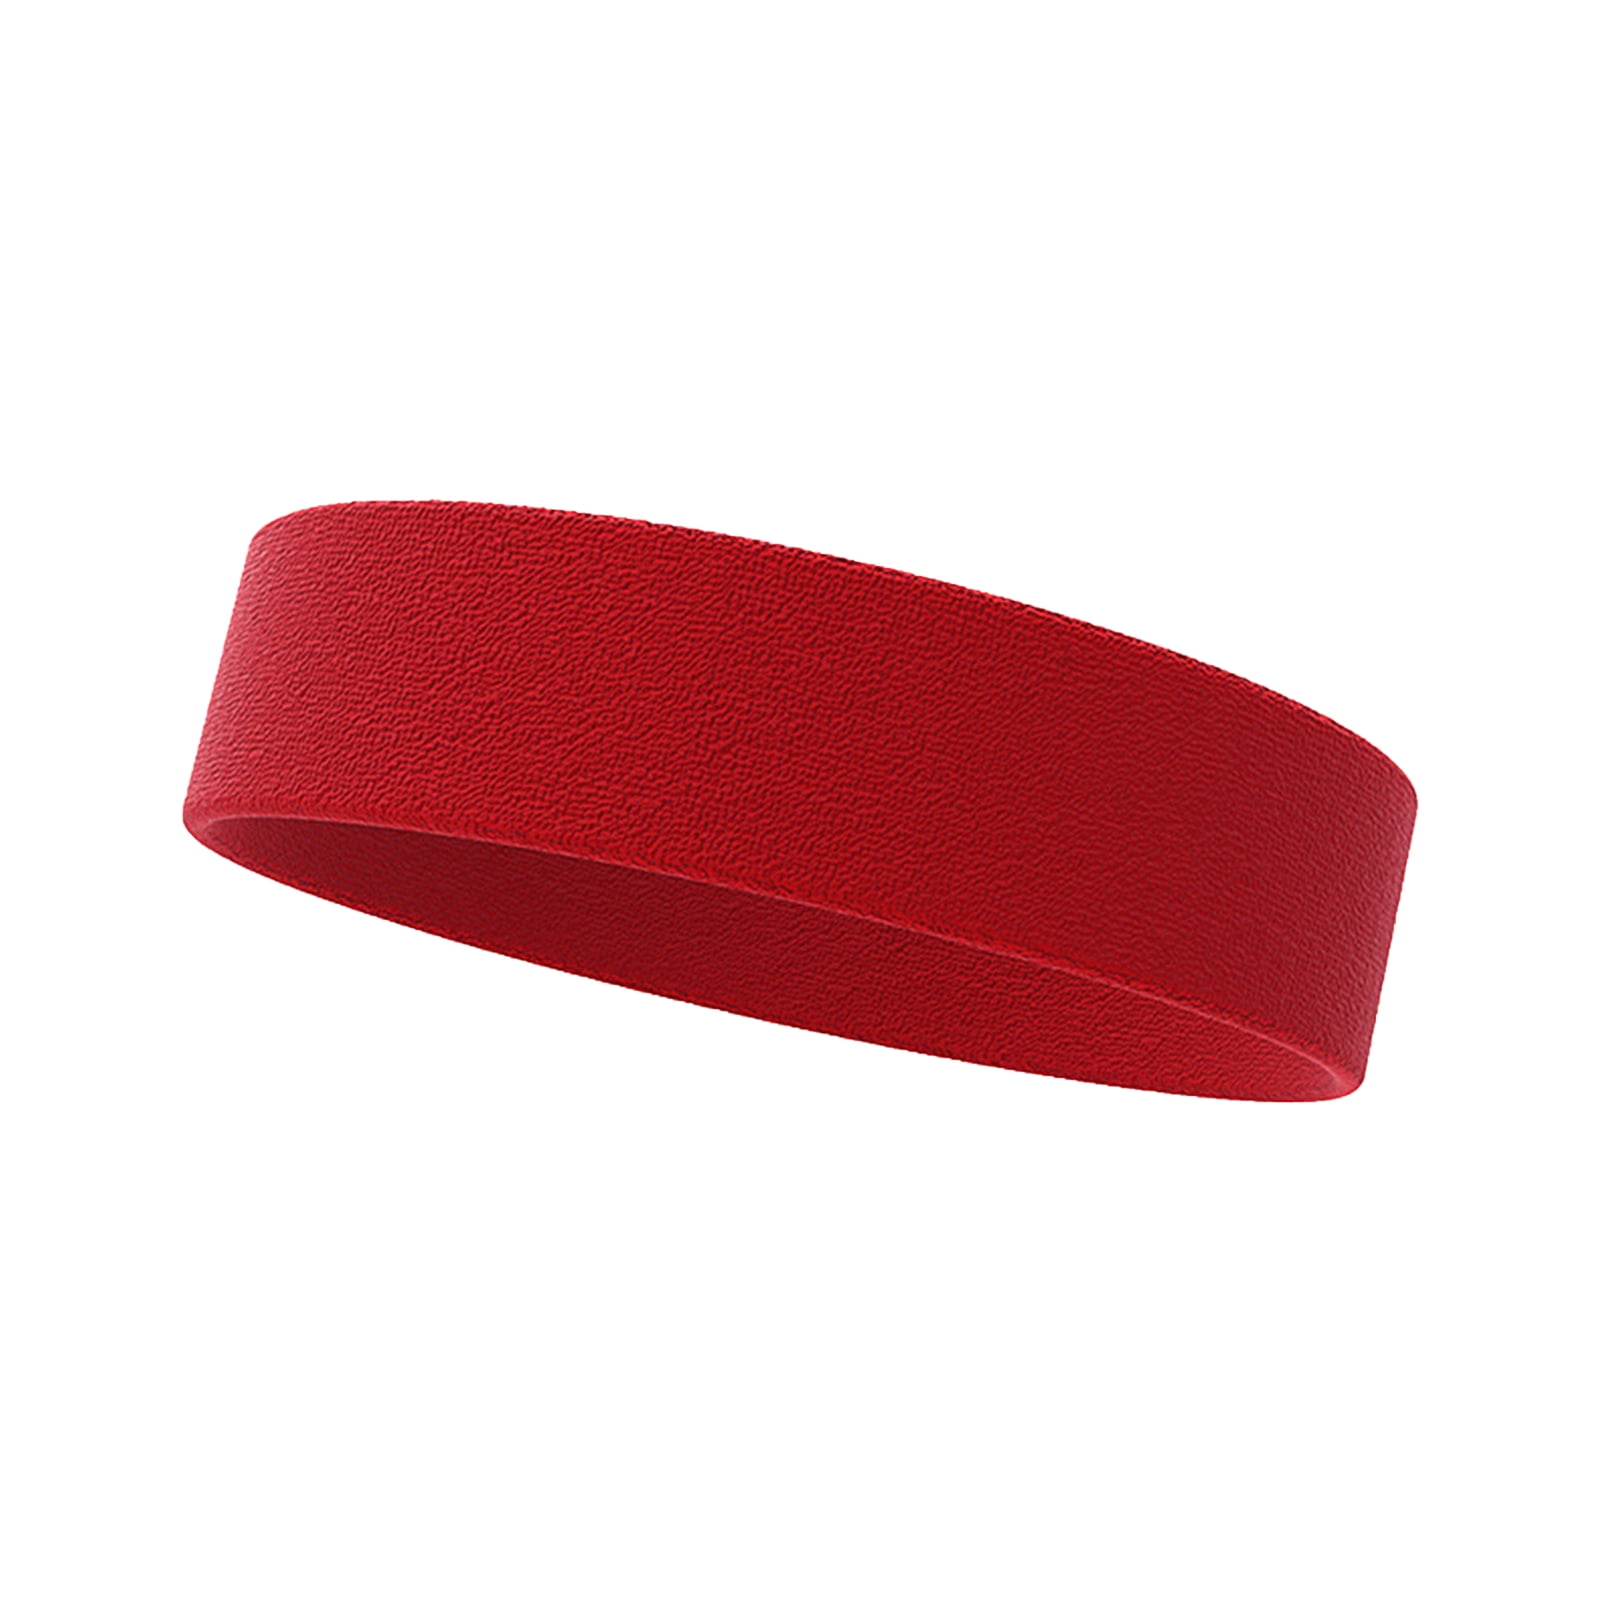 Sanwood1 Sweatband Headband Yoga Gym Unisex Stretch Solid Color Hair Band Outdoor Sport